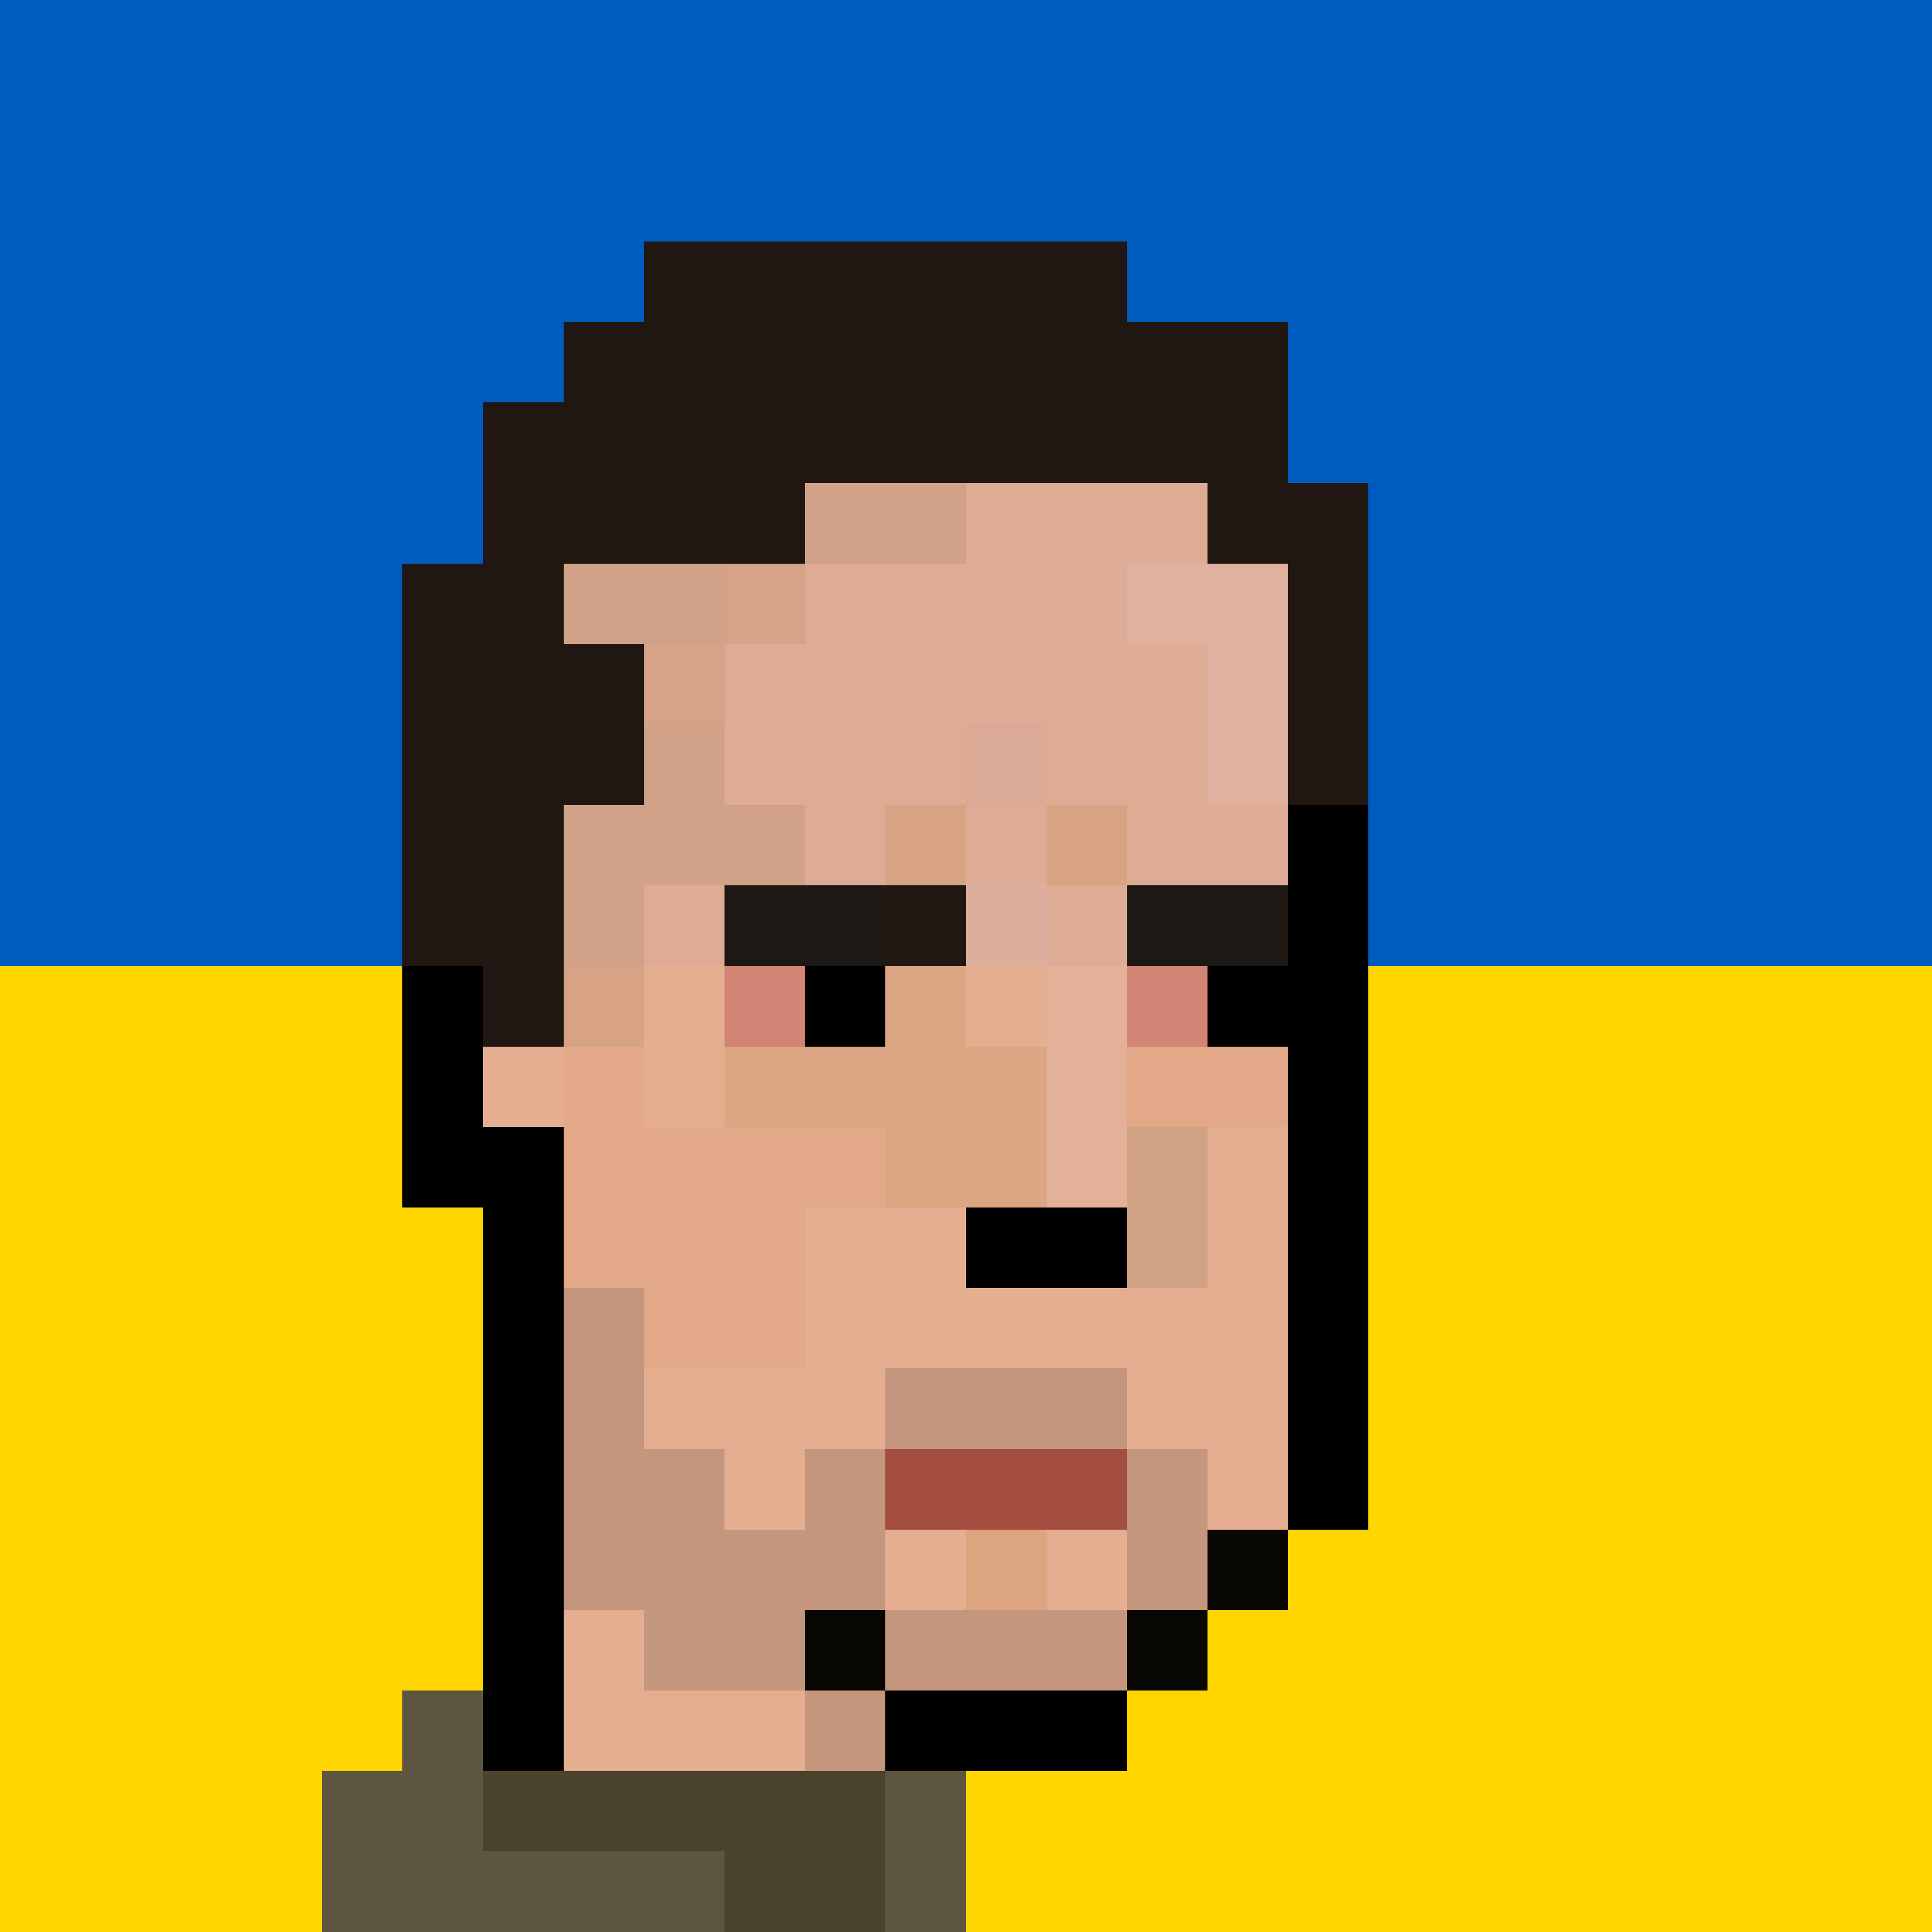 Volodymyr Zelensky Hero For Ukraine - Direct Contribution